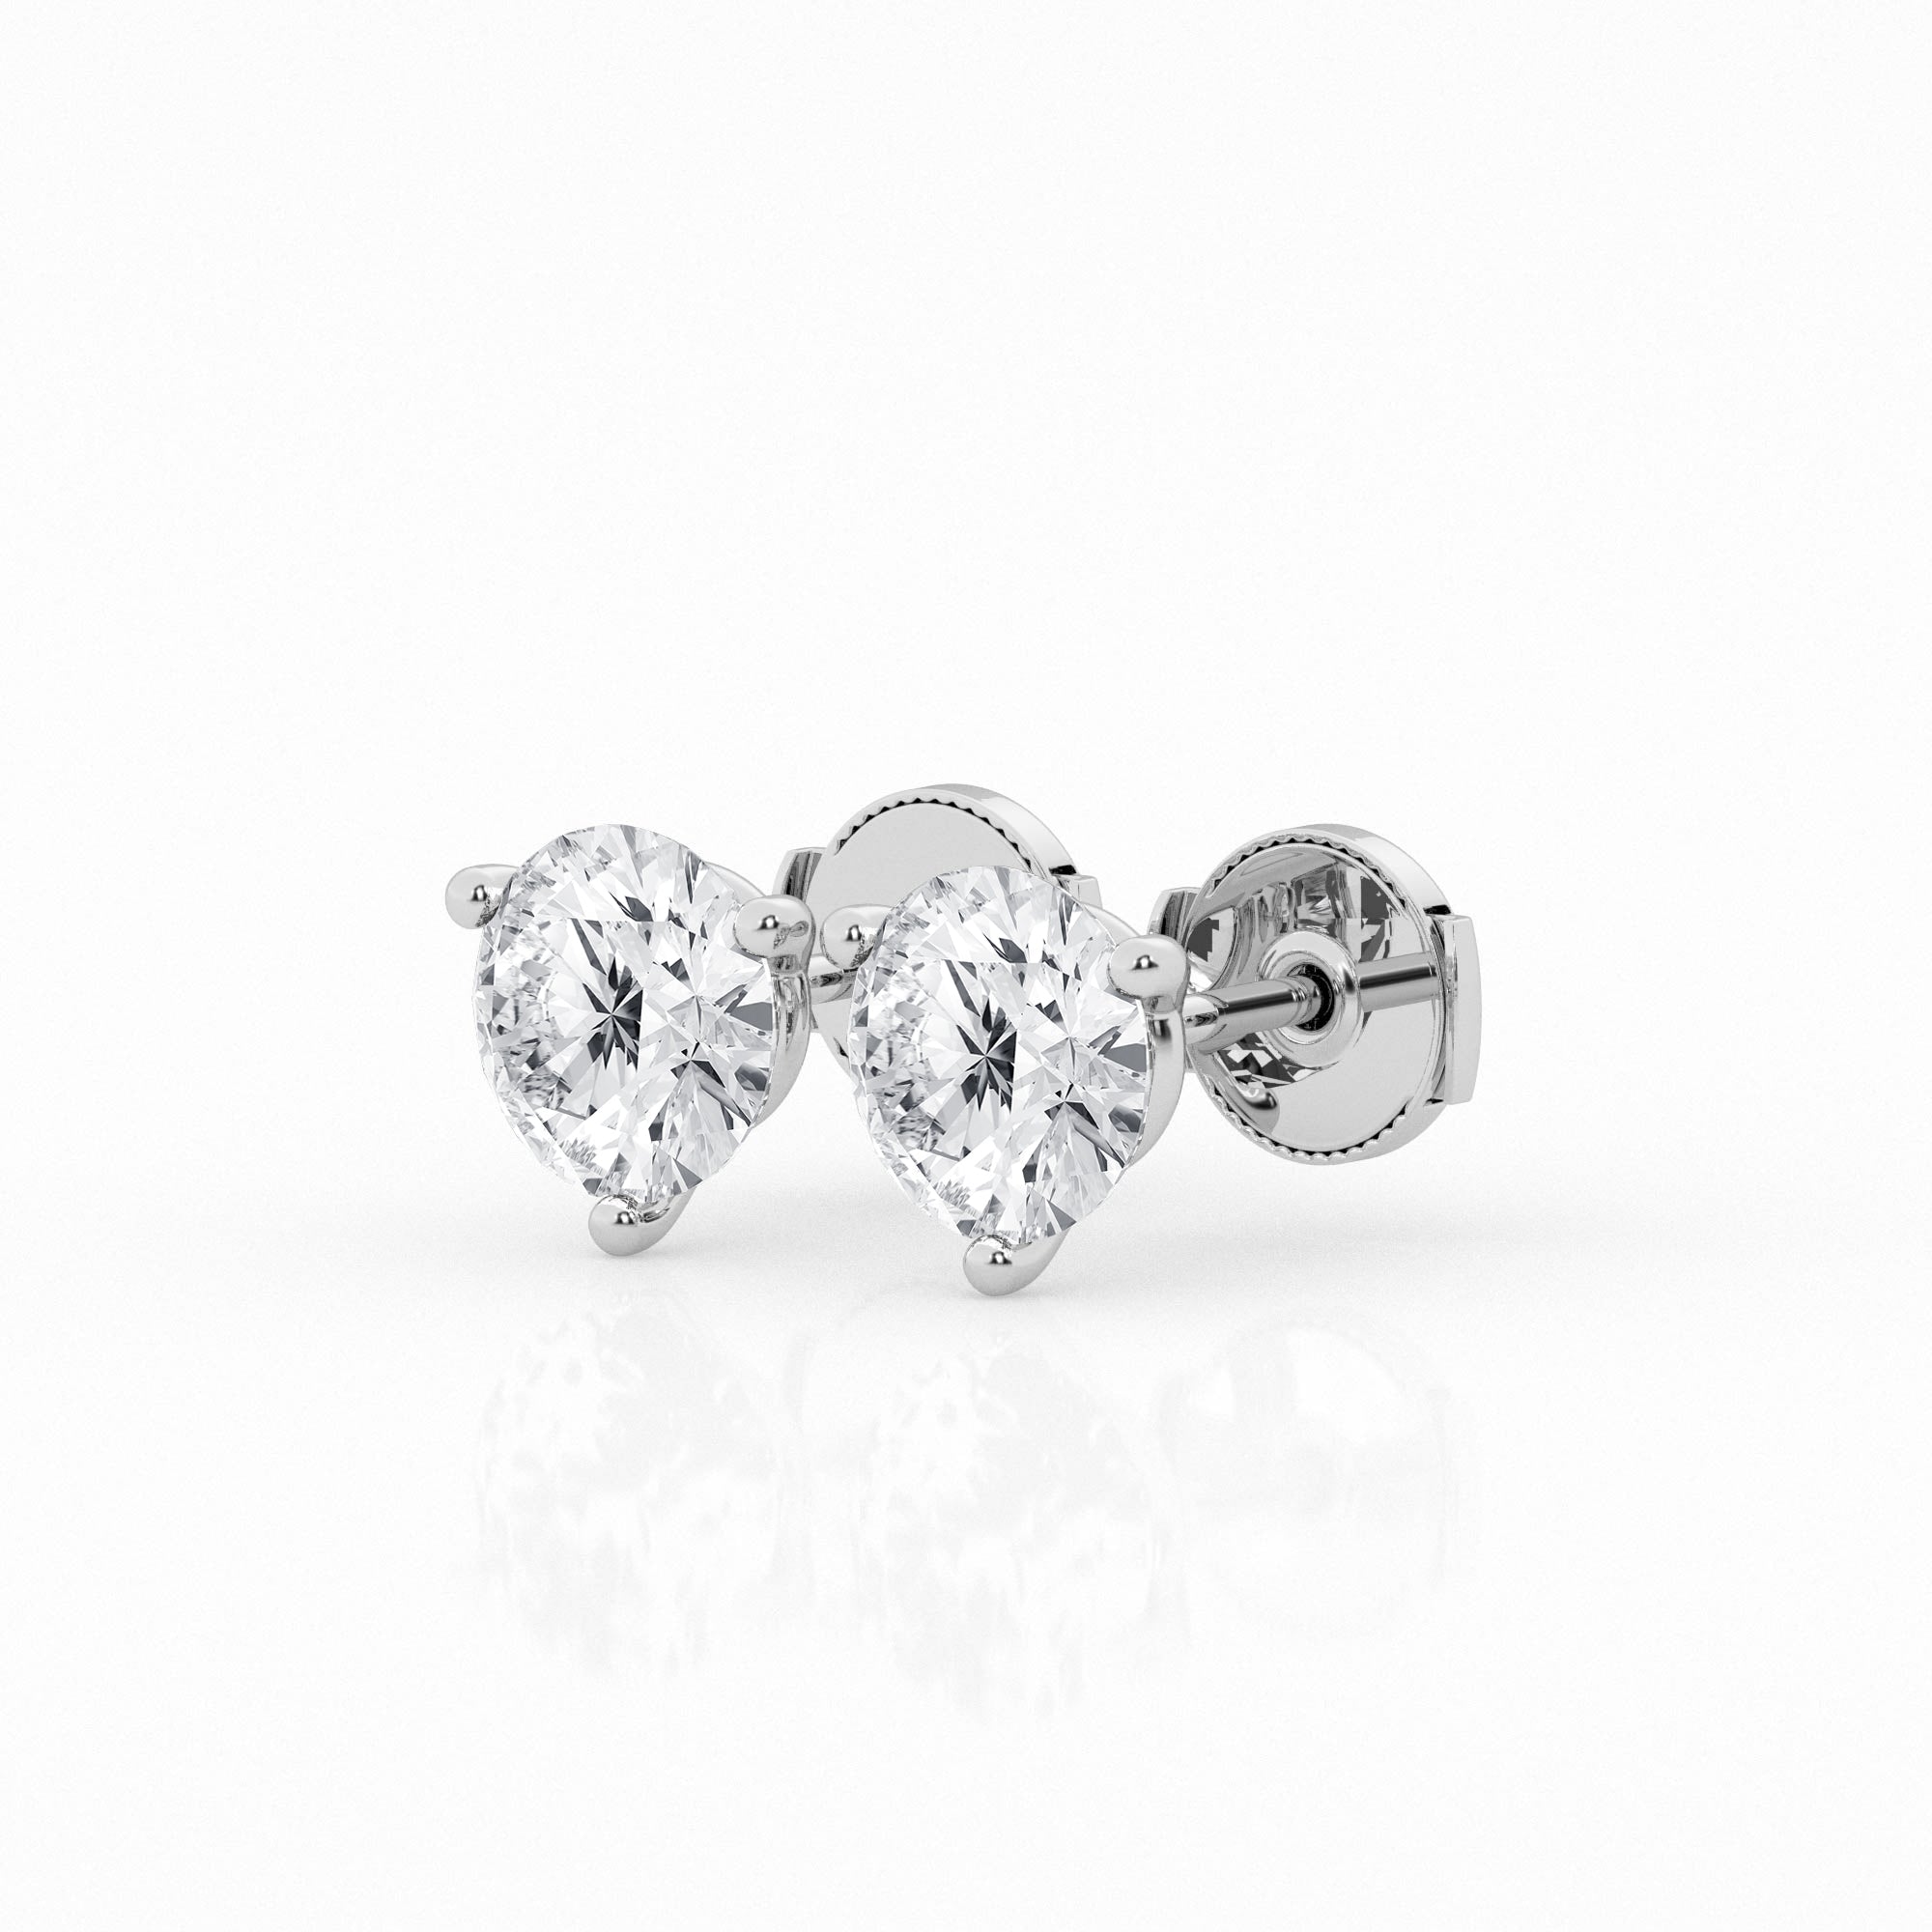 4 carat Round Diamond Earring Studs